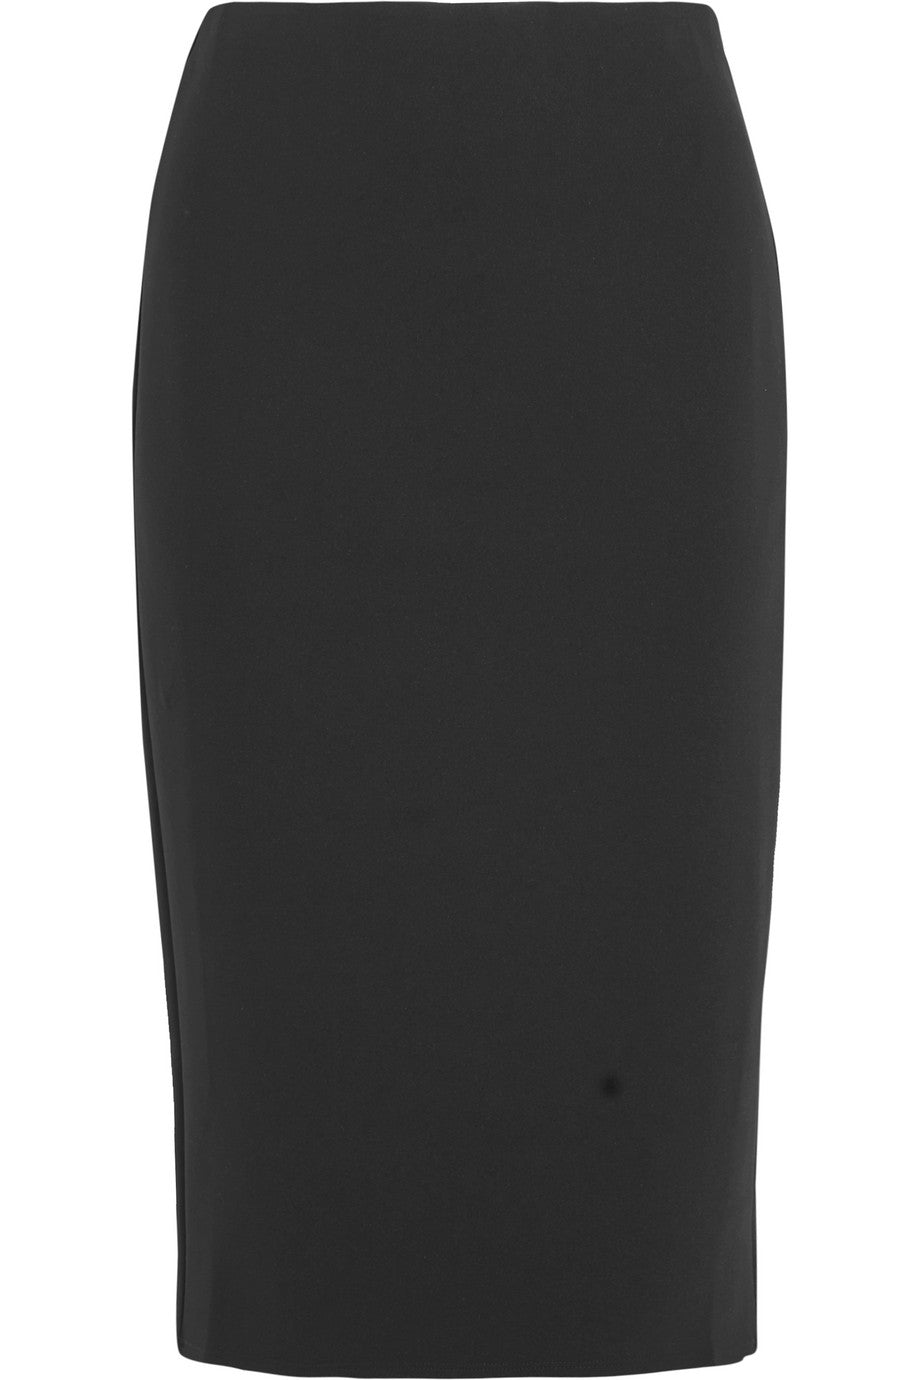 The Row - 'Rabina' black stretch jersey midi skirt